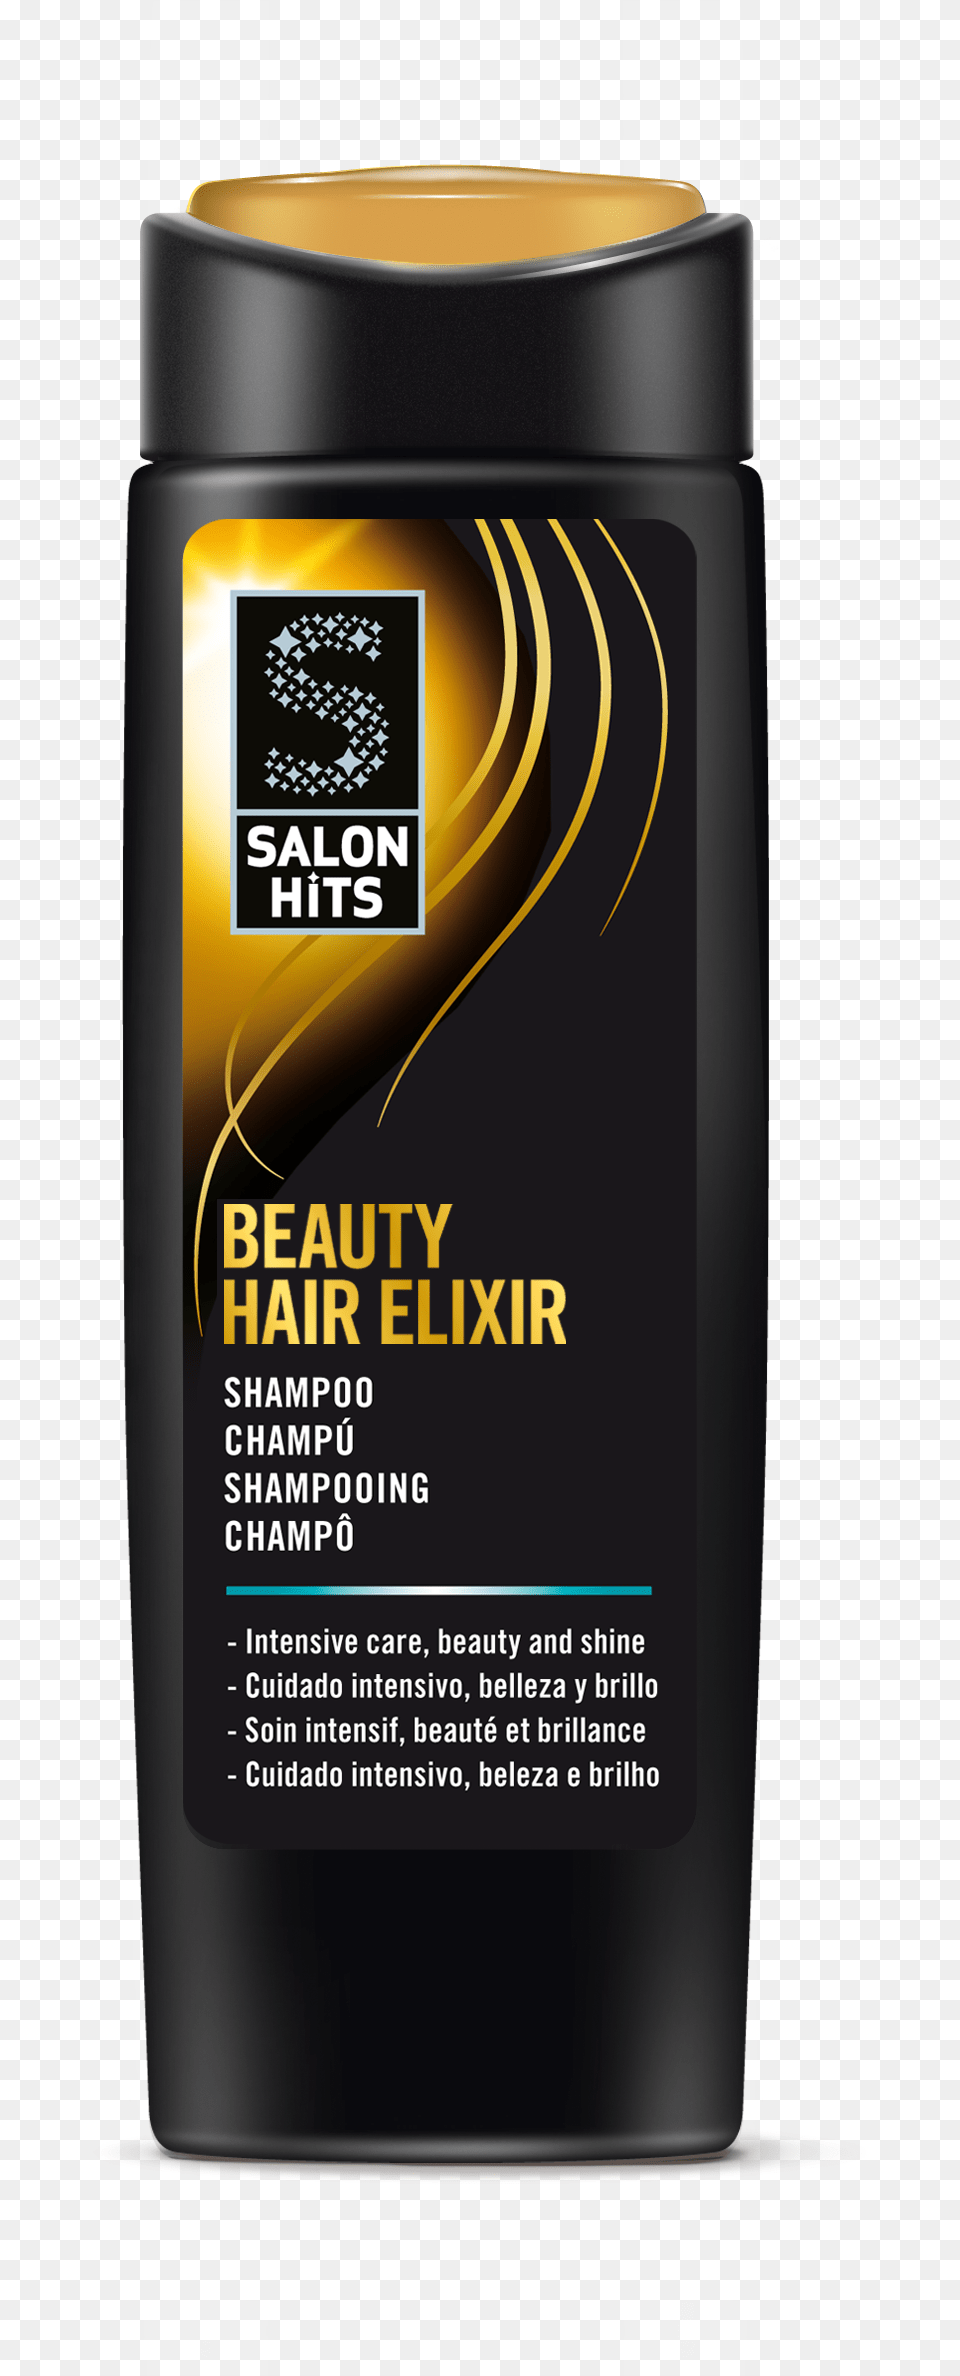 Champu Salon Hits Beauty Hair Elixir, Bottle, Cosmetics, Perfume Png